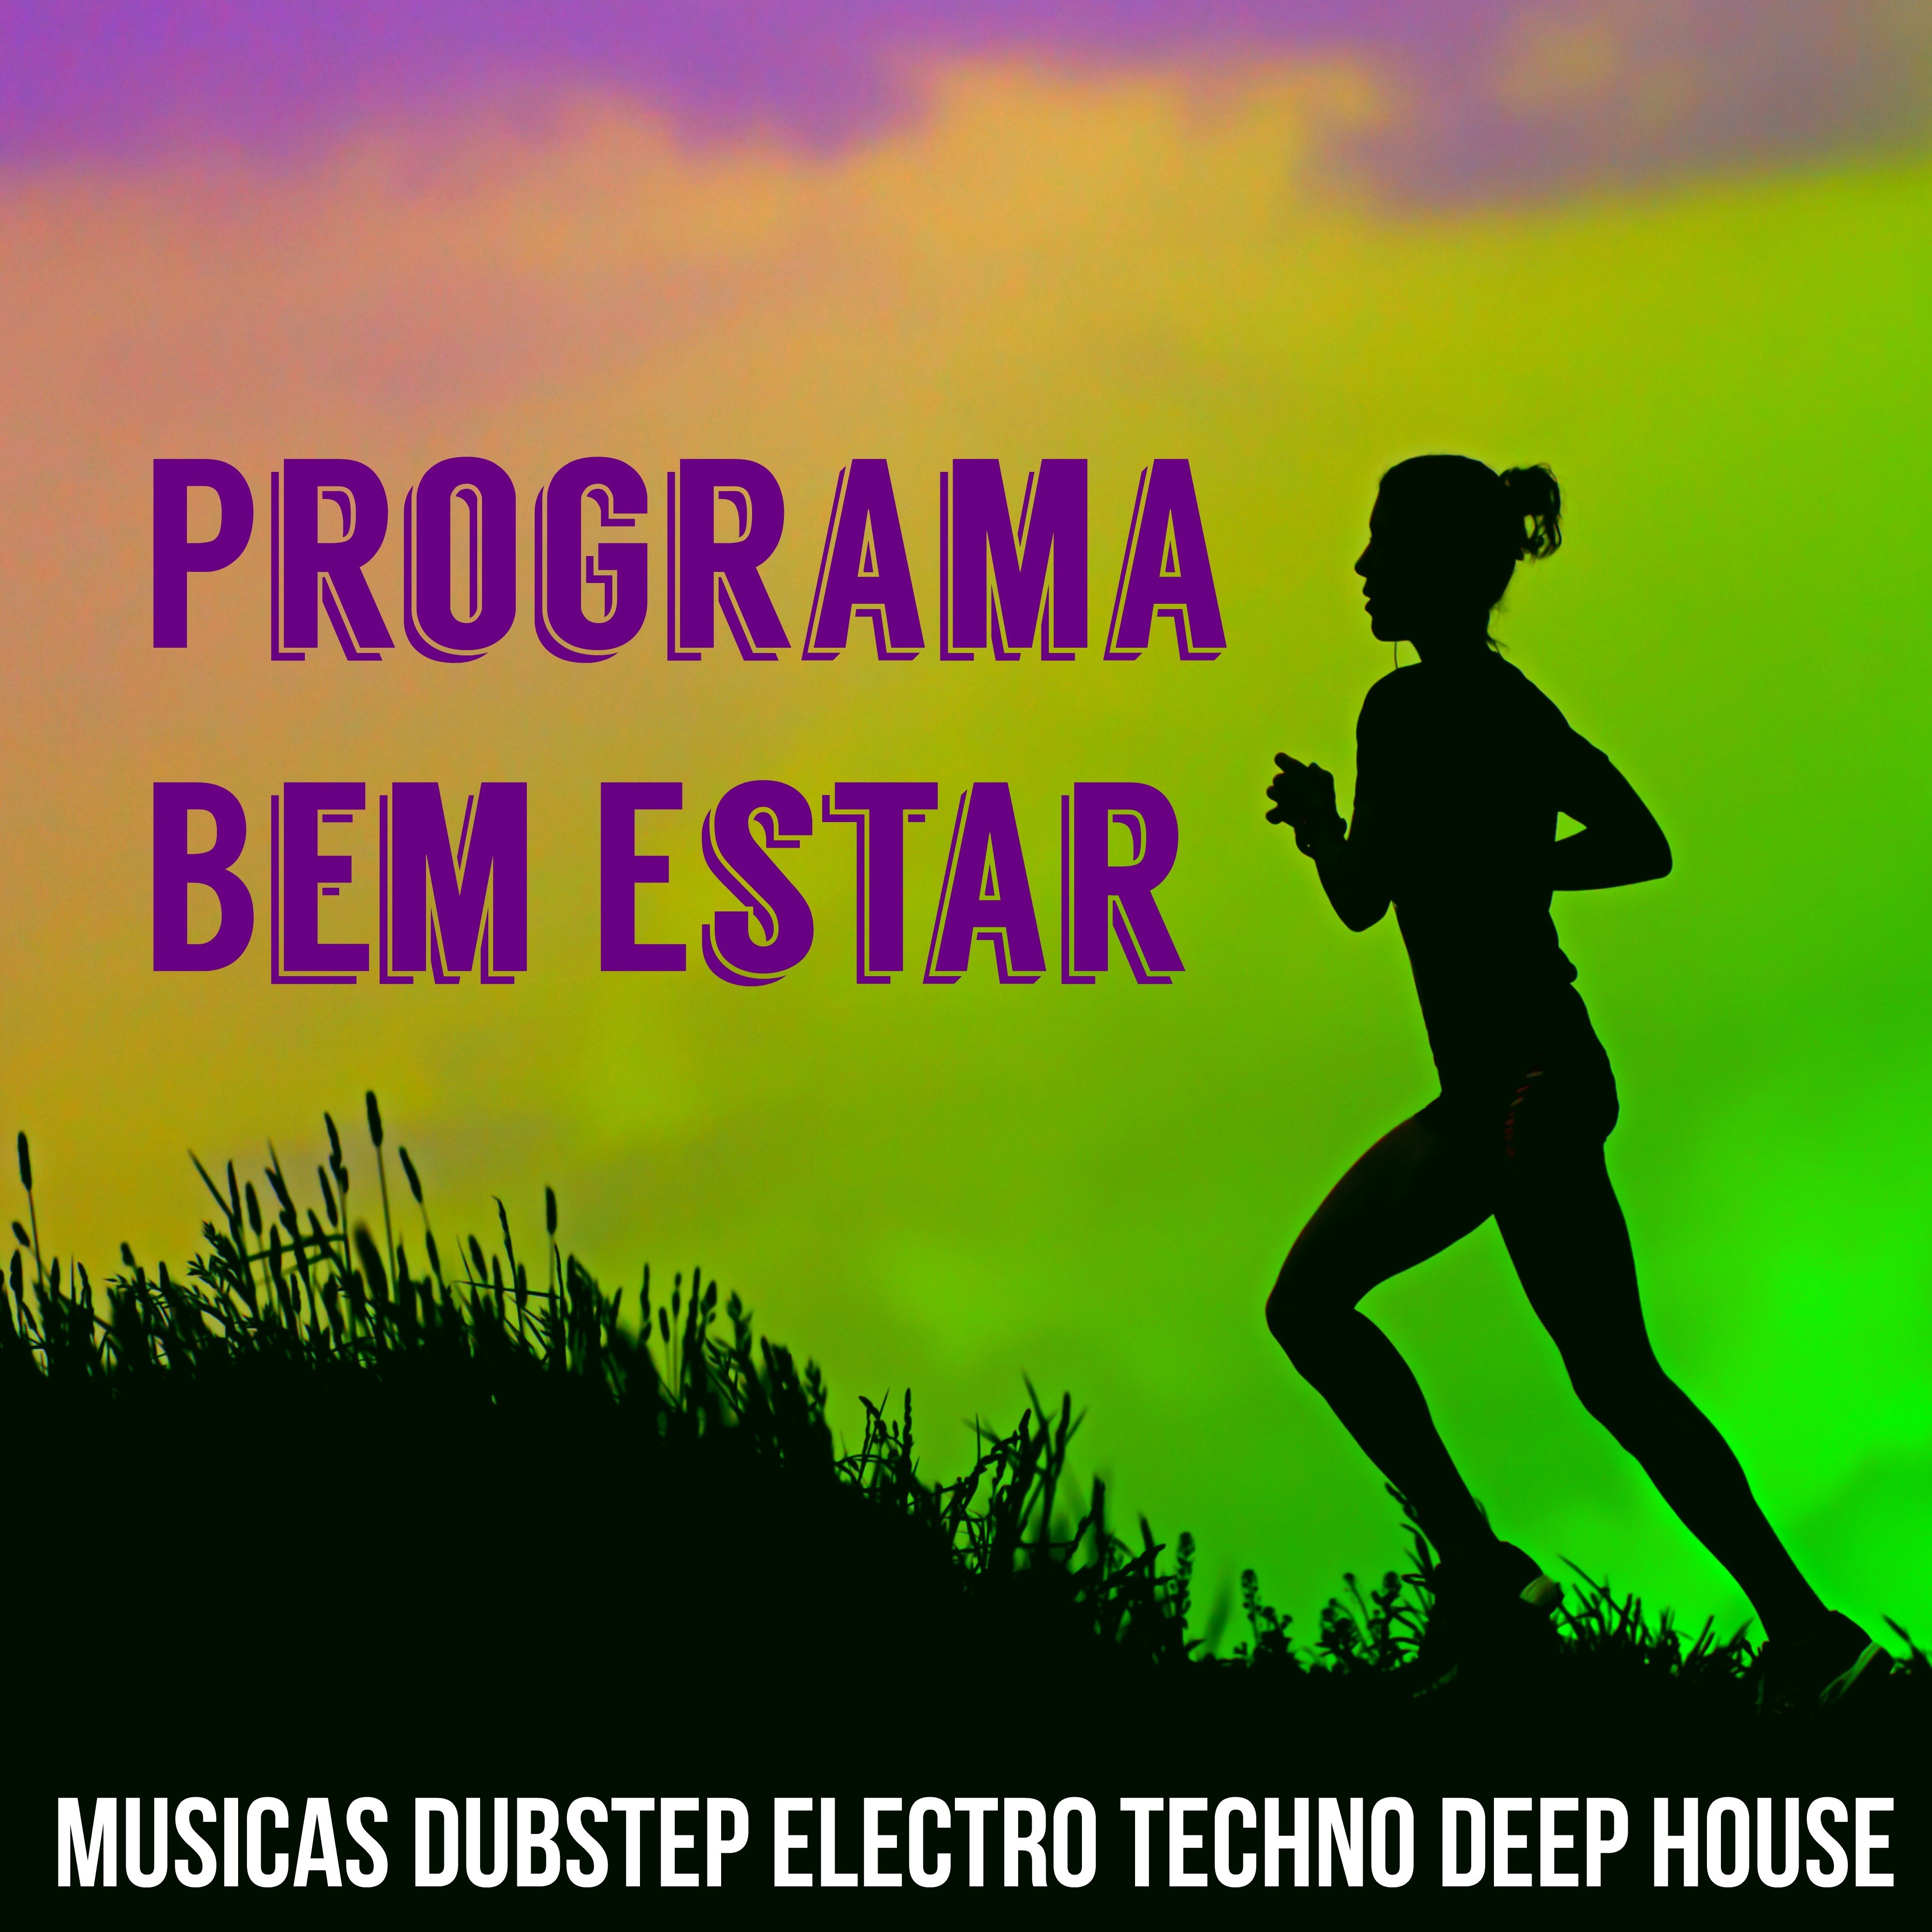 Programa Bem Estar  Musicas Dubstep Electro Techno Deep House para um Treinamento Fisico de Alta Intensiedade Circuito Funcional e Exercicios para Defini o Muscular